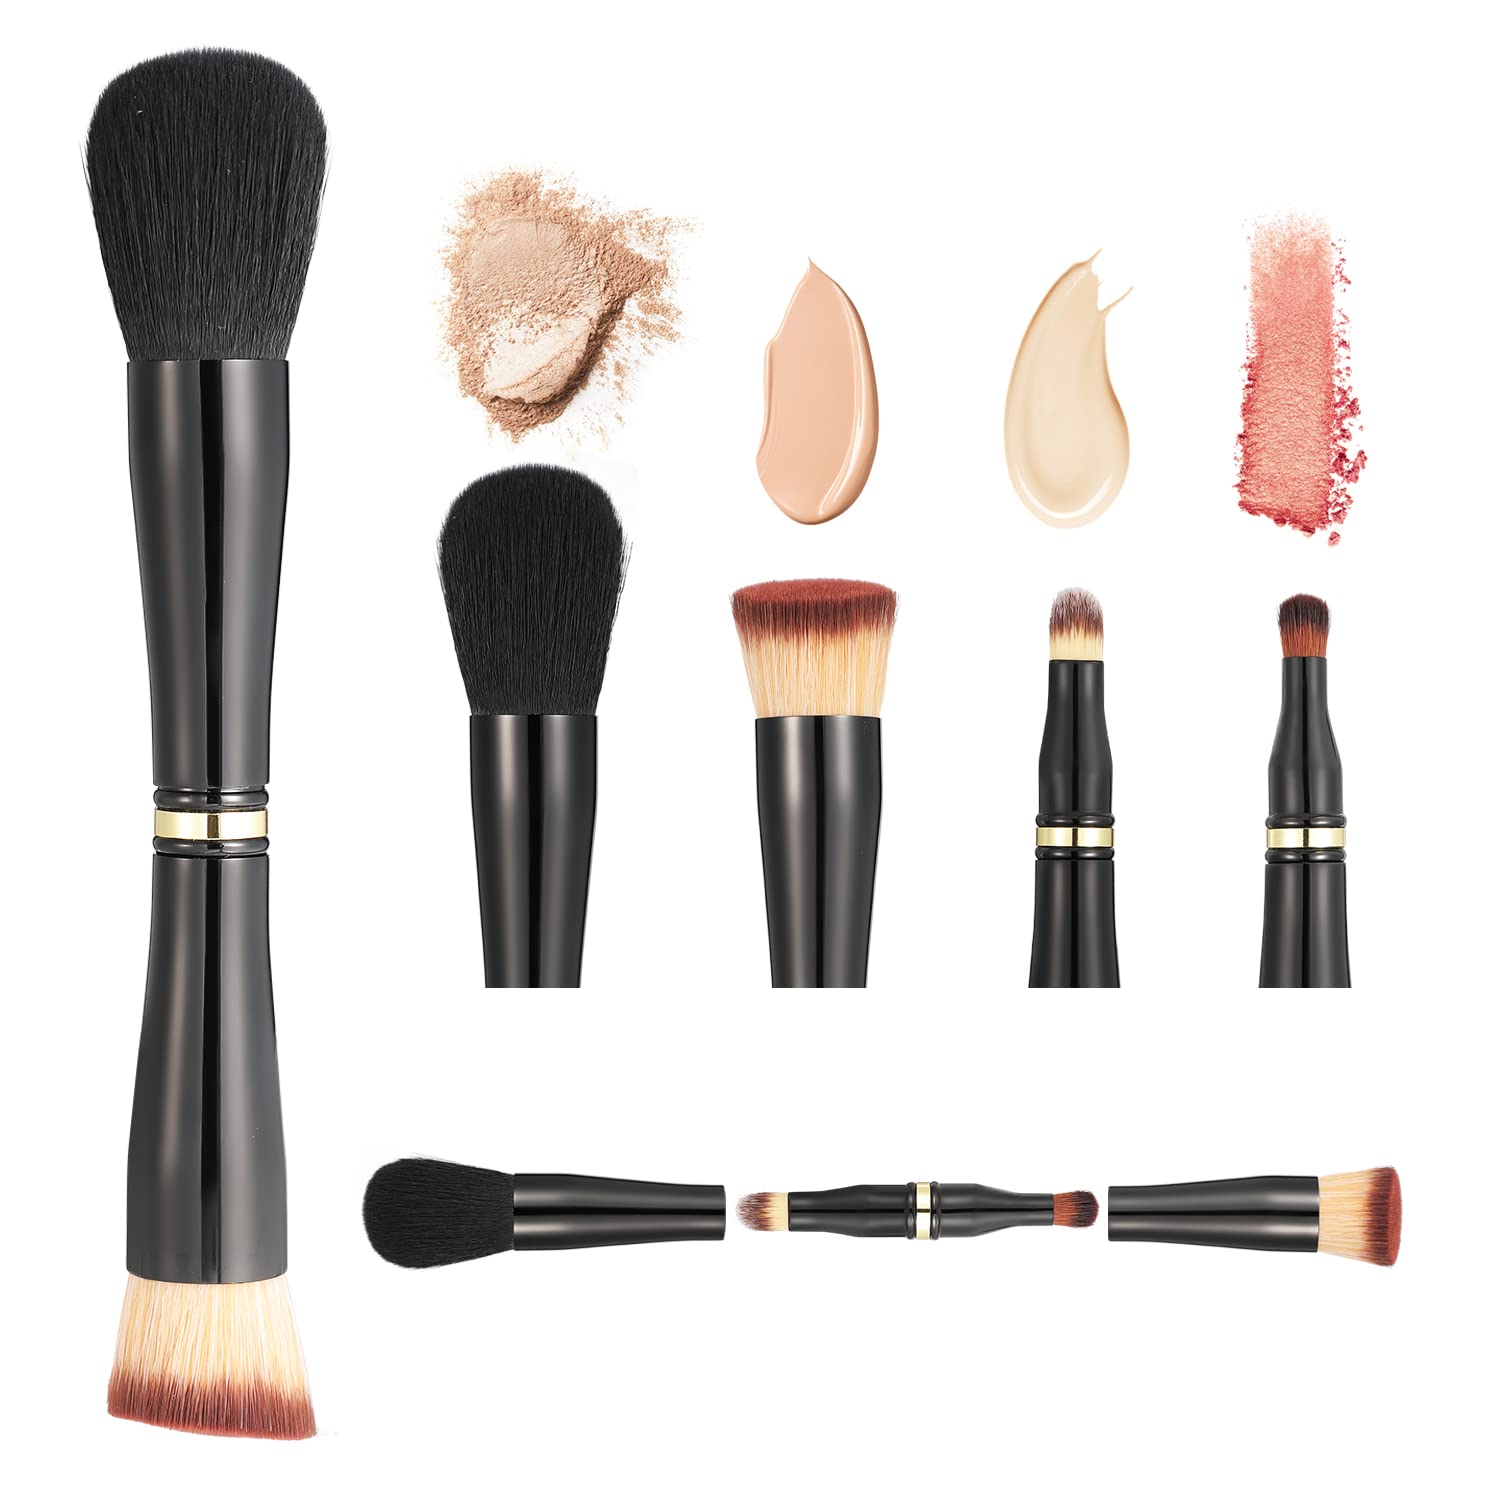 Wholesale 4 in 1 Double Ended Makeup Brush Set Portable Travel Foundation Powder Eyeshadow Brush Tools